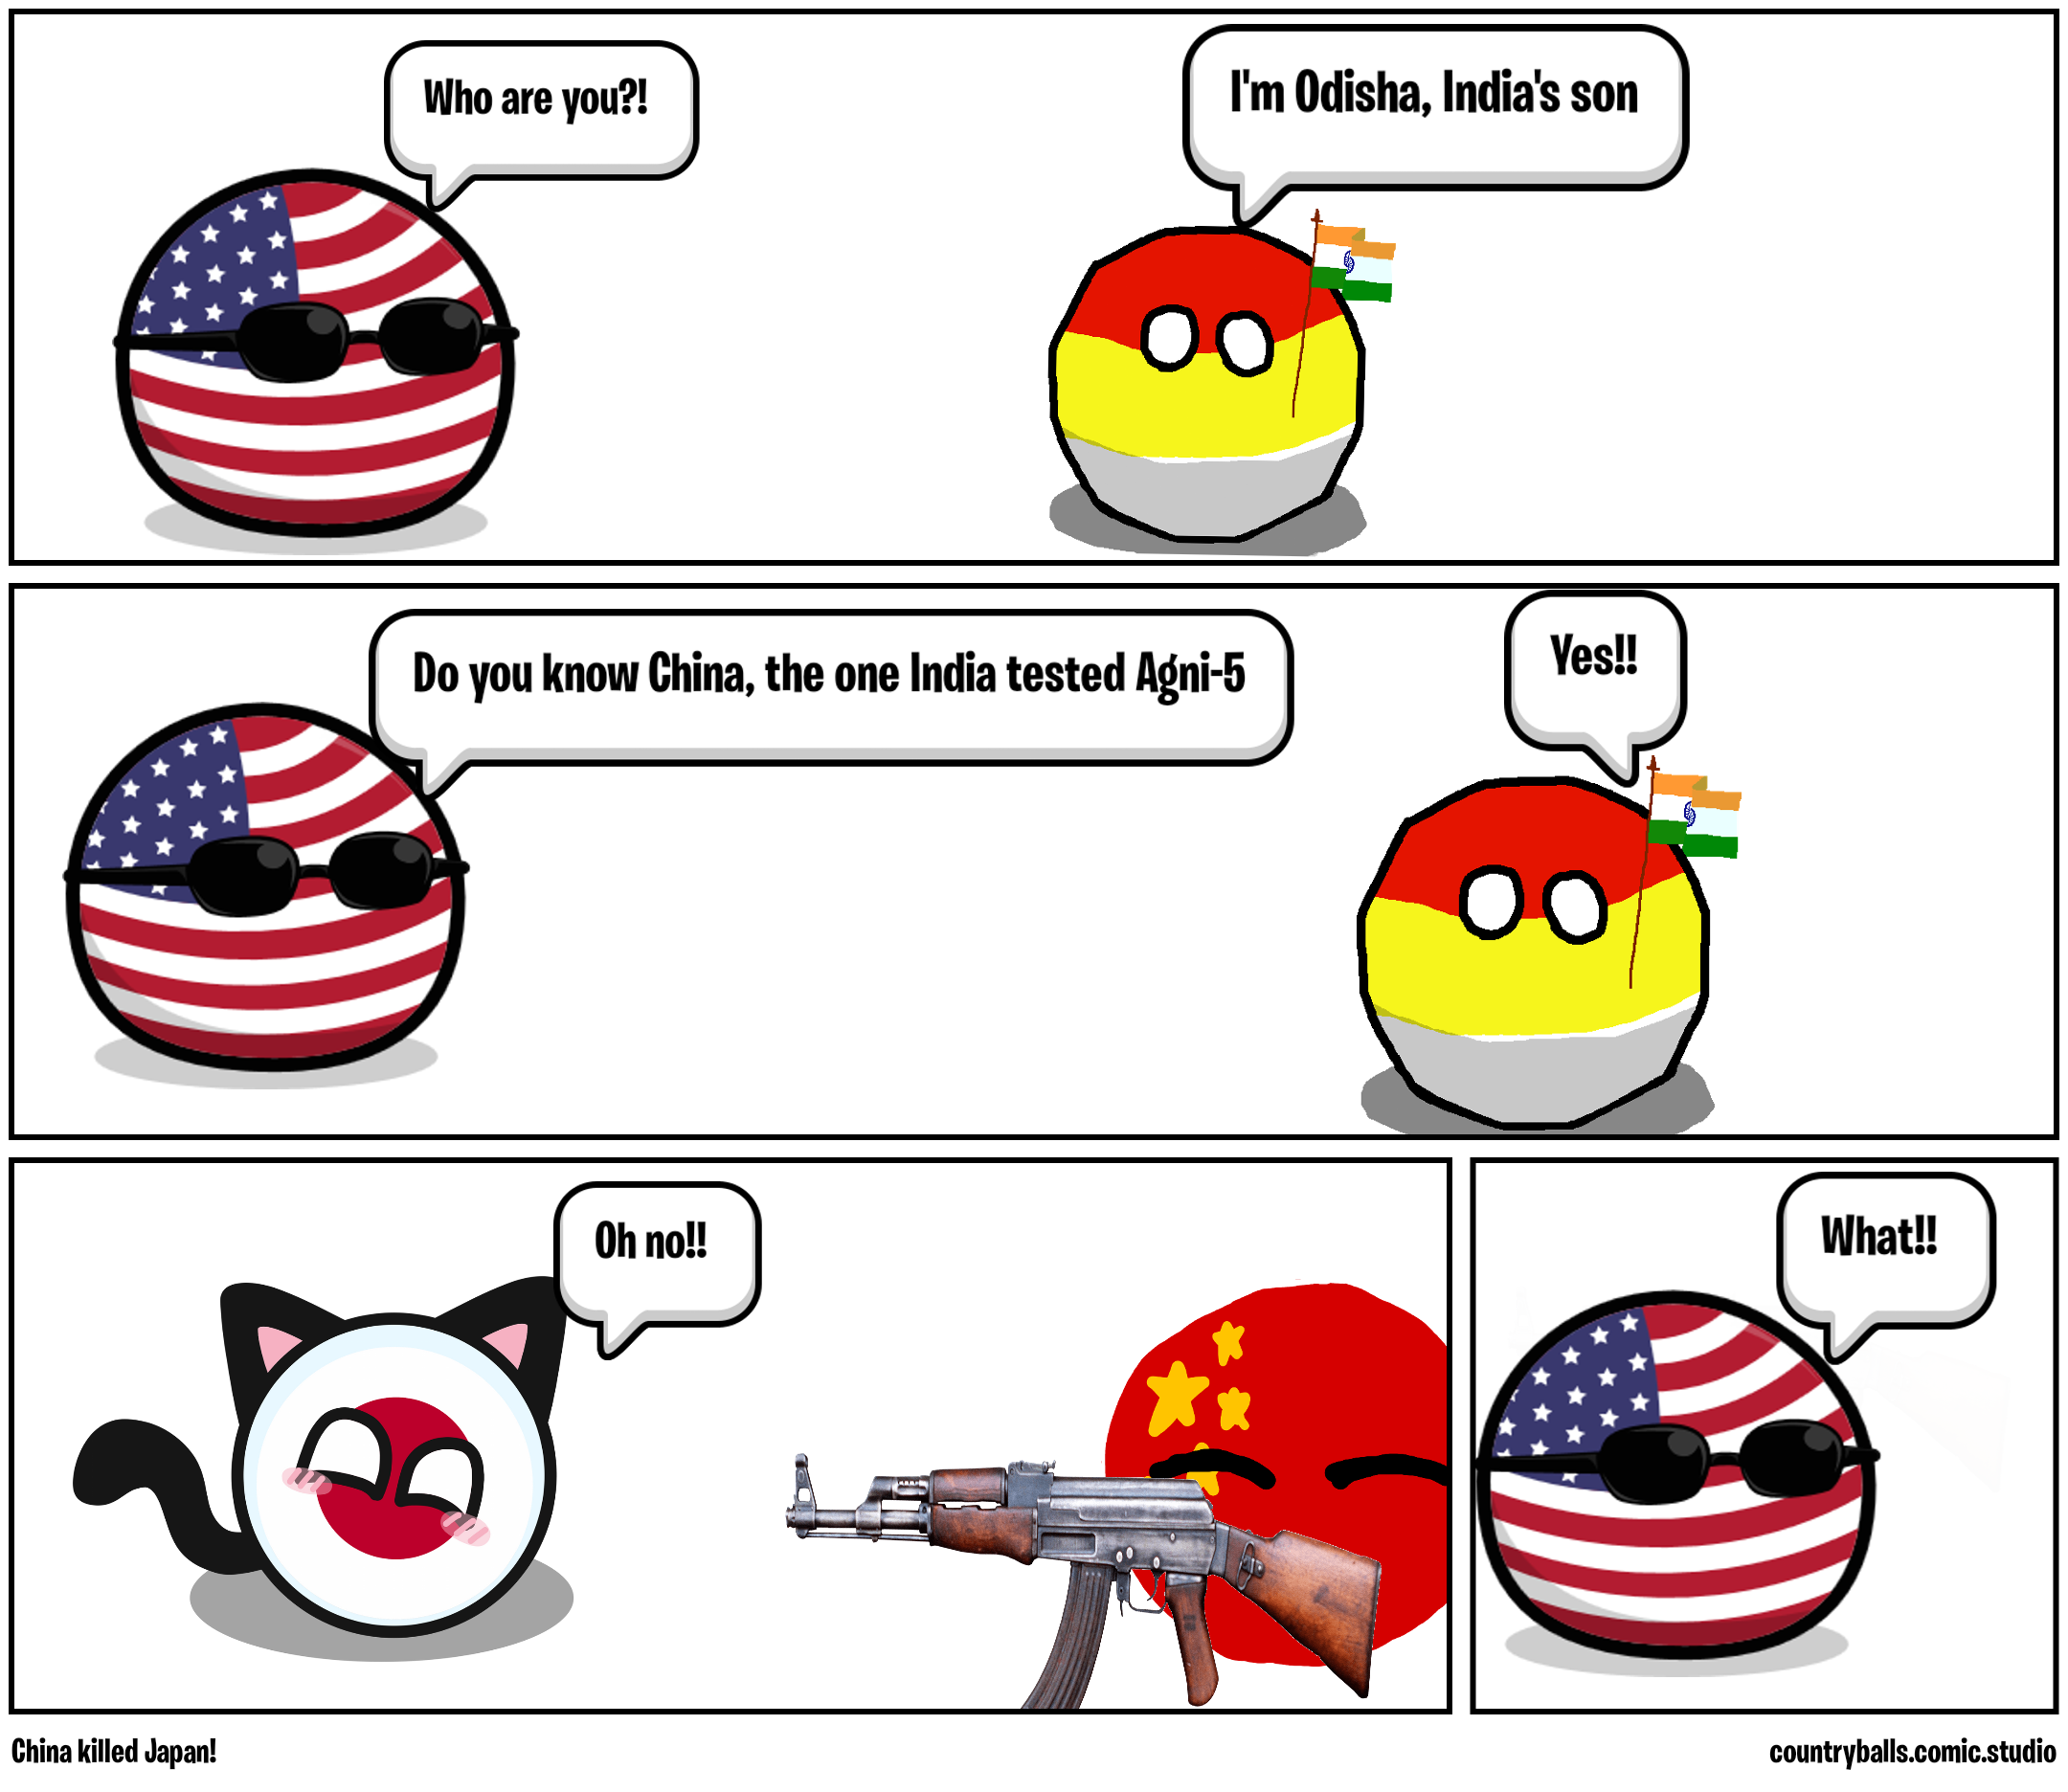 China killed Japan!